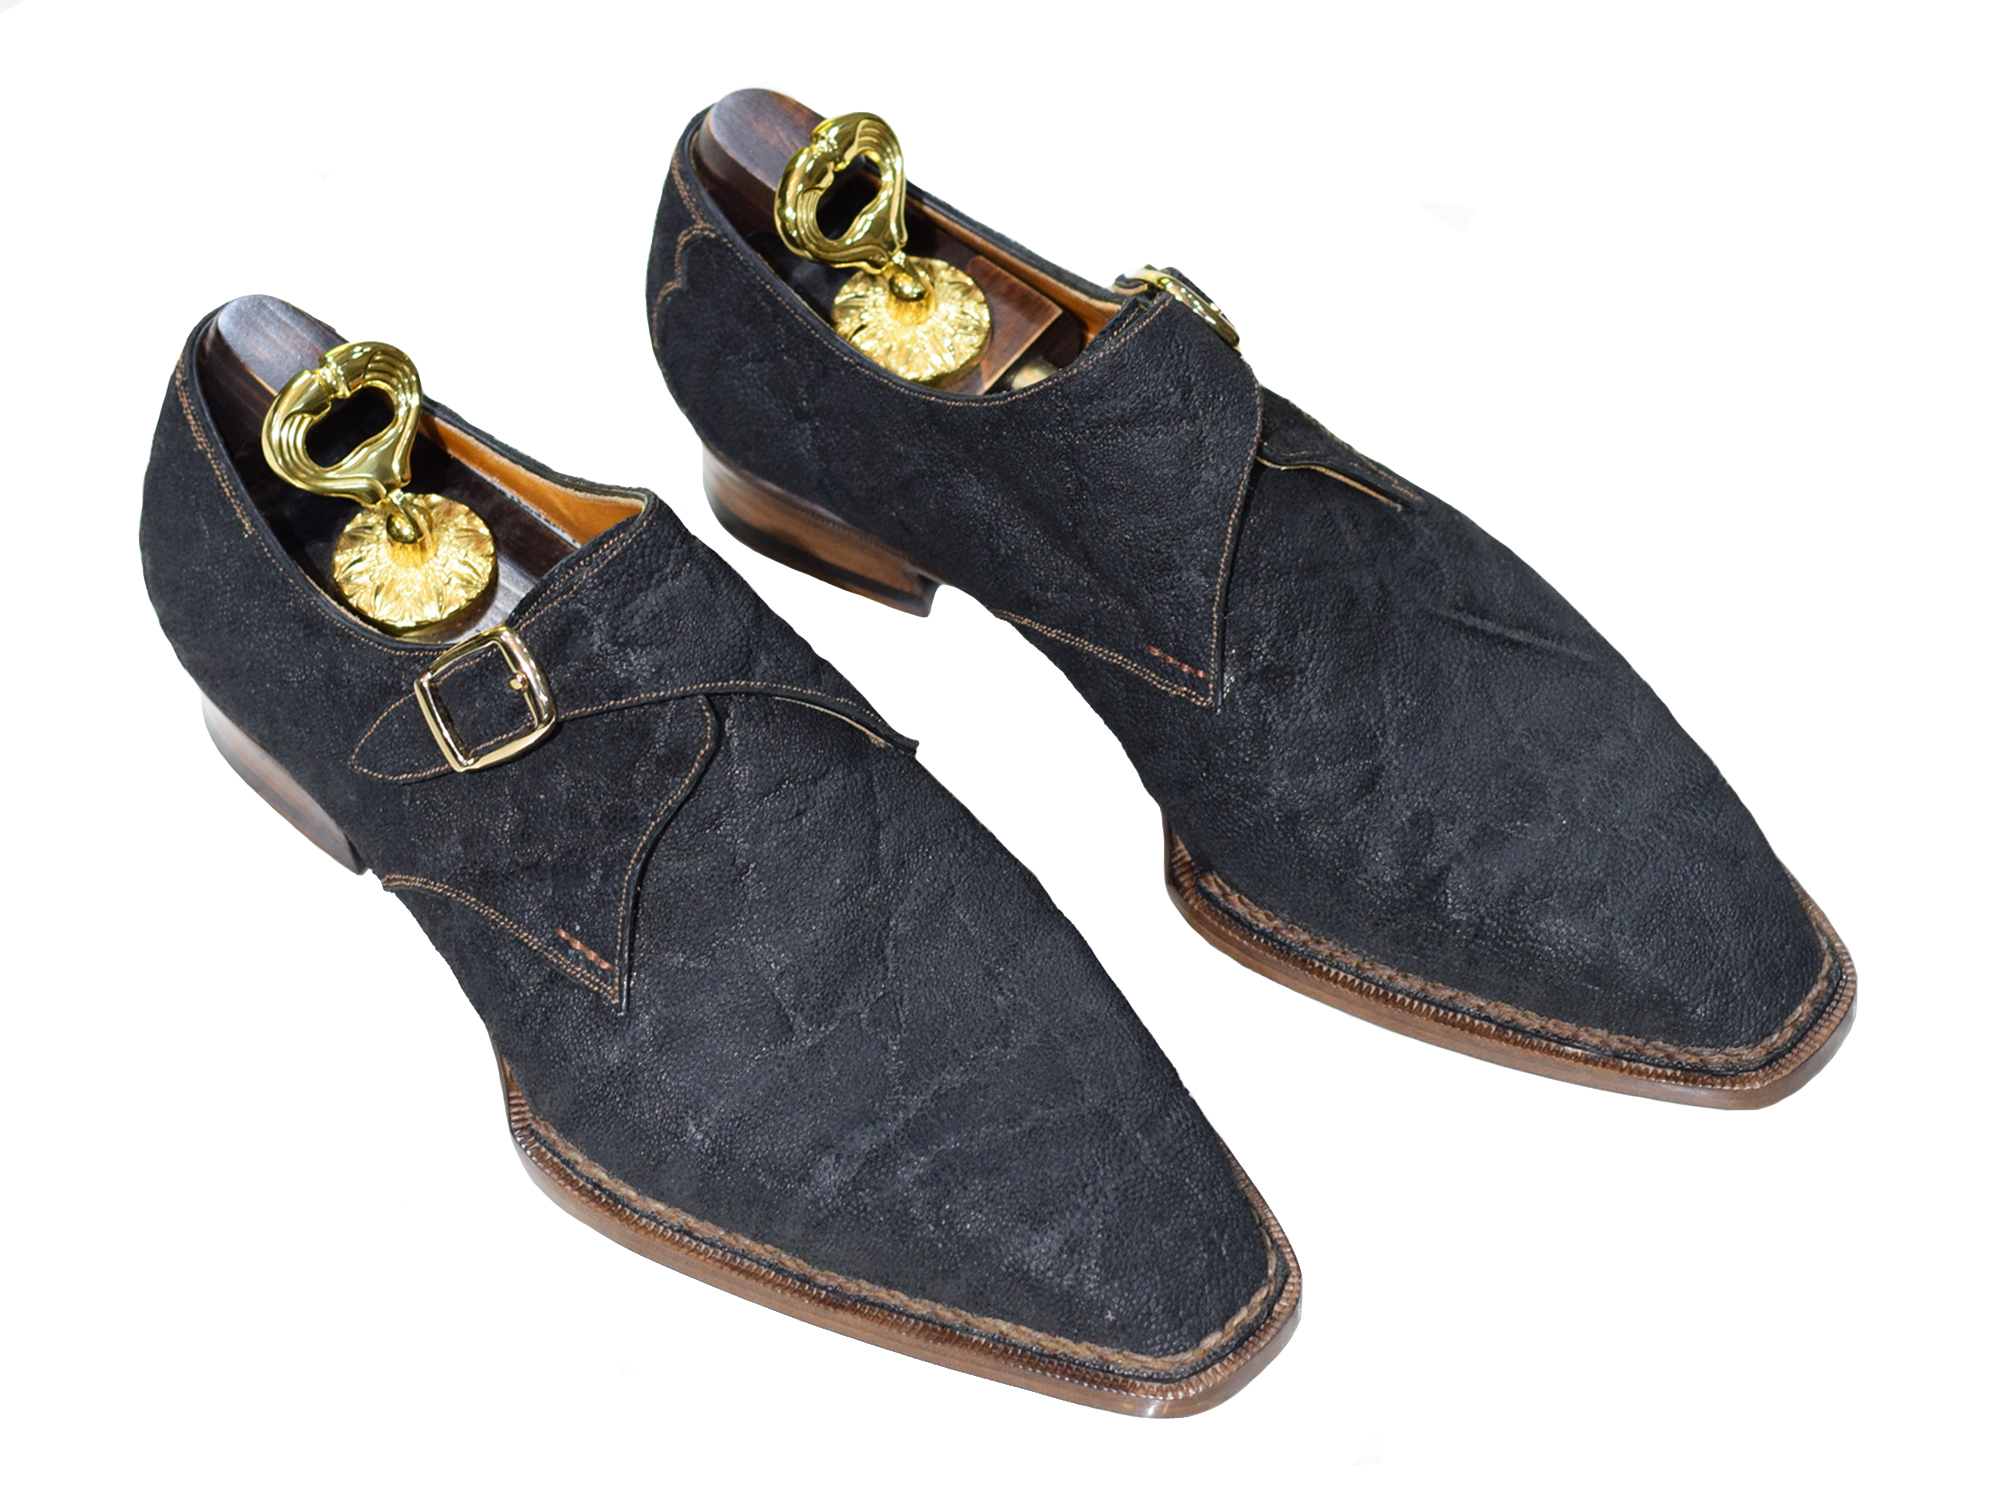 MTO Single Monkstrap Shoes elephant leather – Optimum line